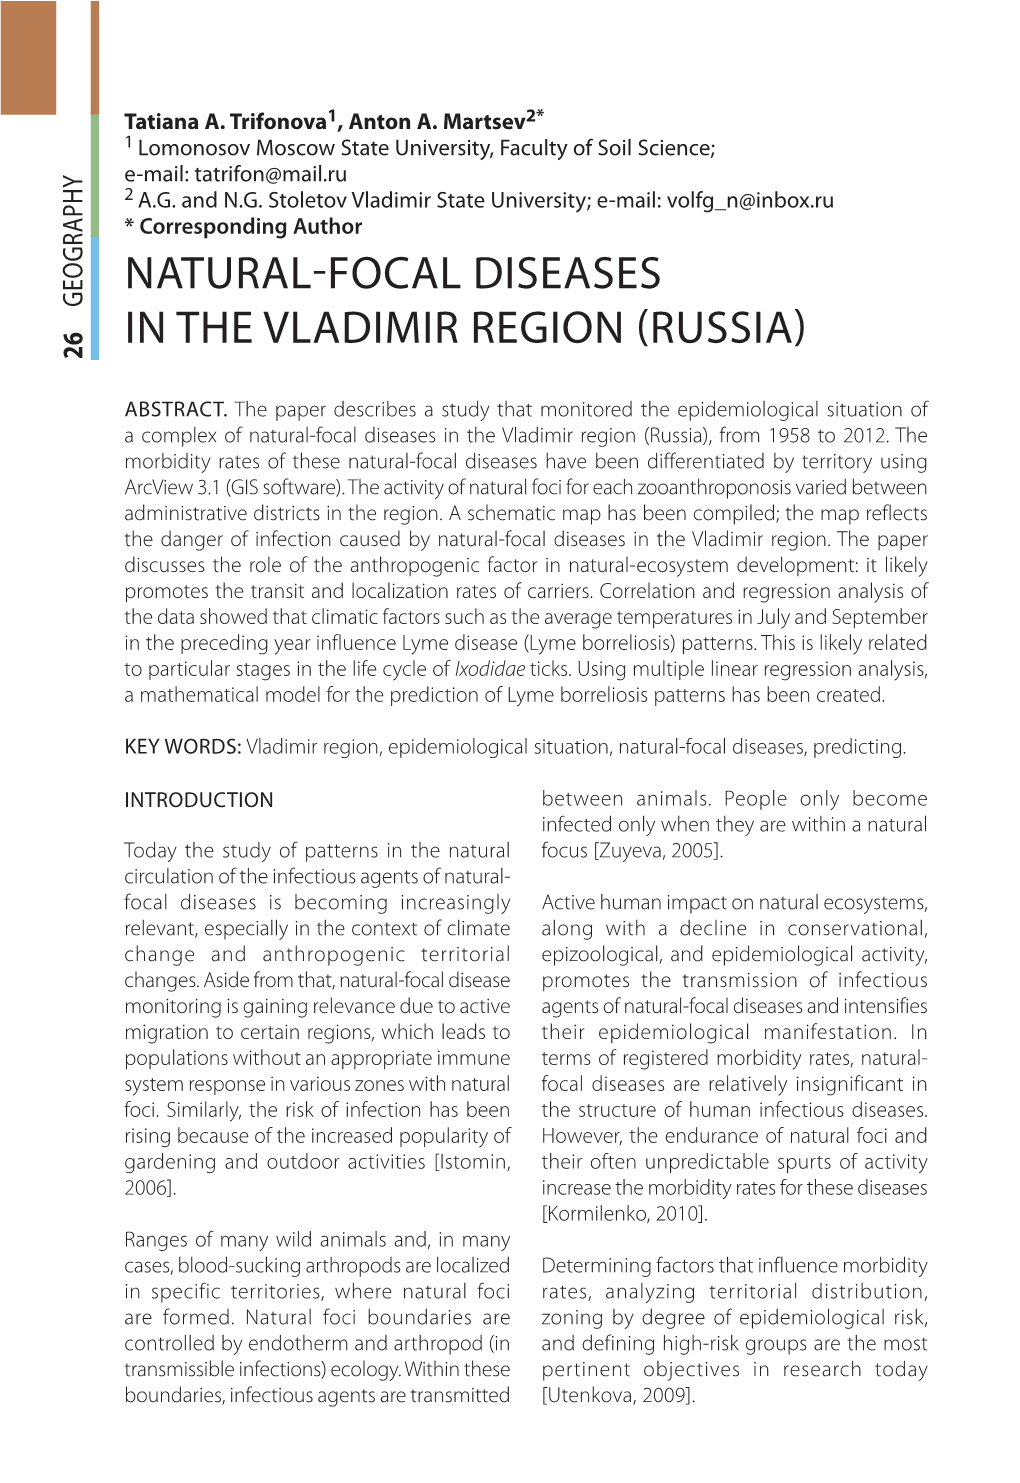 NATURAL-FOCAL DISEASES in the VLADIMIR REGION (RUSSIA) and ( Field Mice( and the Vladimir Region Isinatemperate Abundance Ofwetlands Andlakes